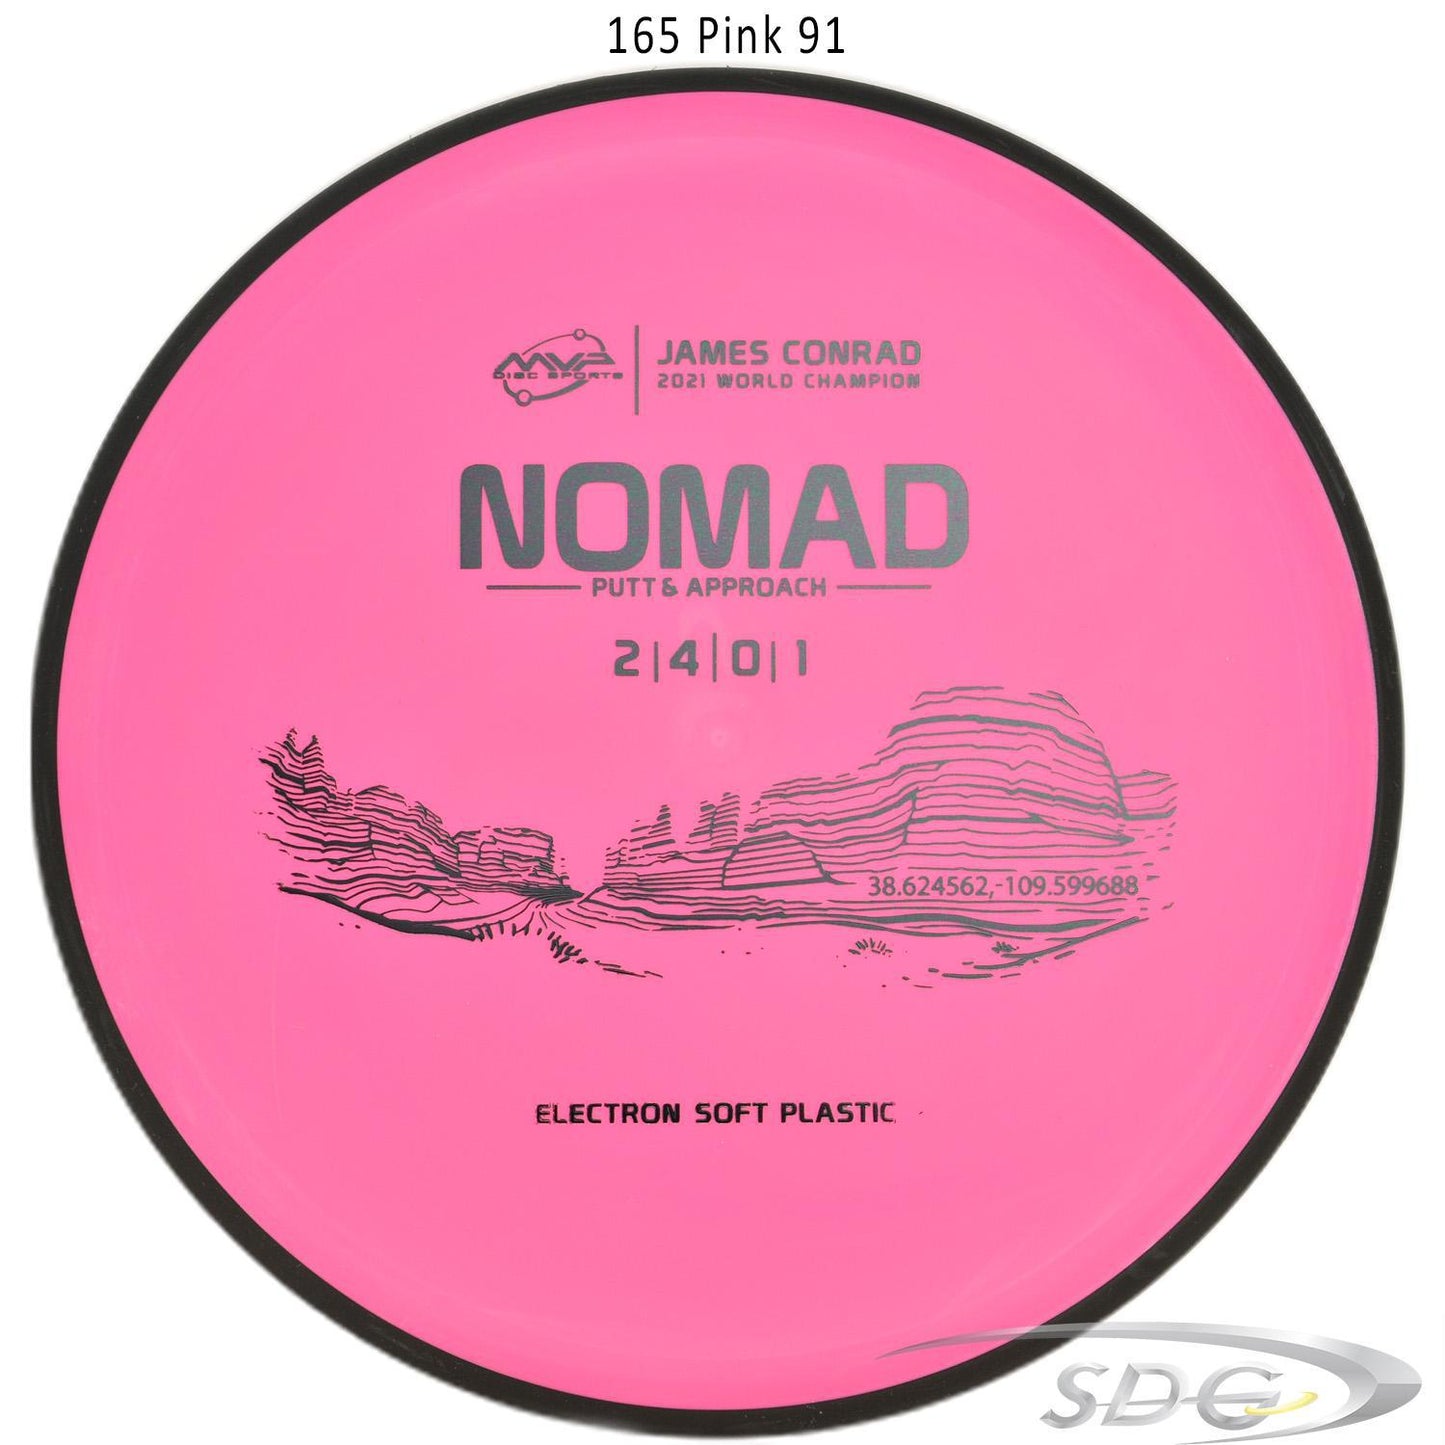 mvp-electron-nomad-soft-james-conrad-edition-disc-golf-putter-1 165 Pink 91 